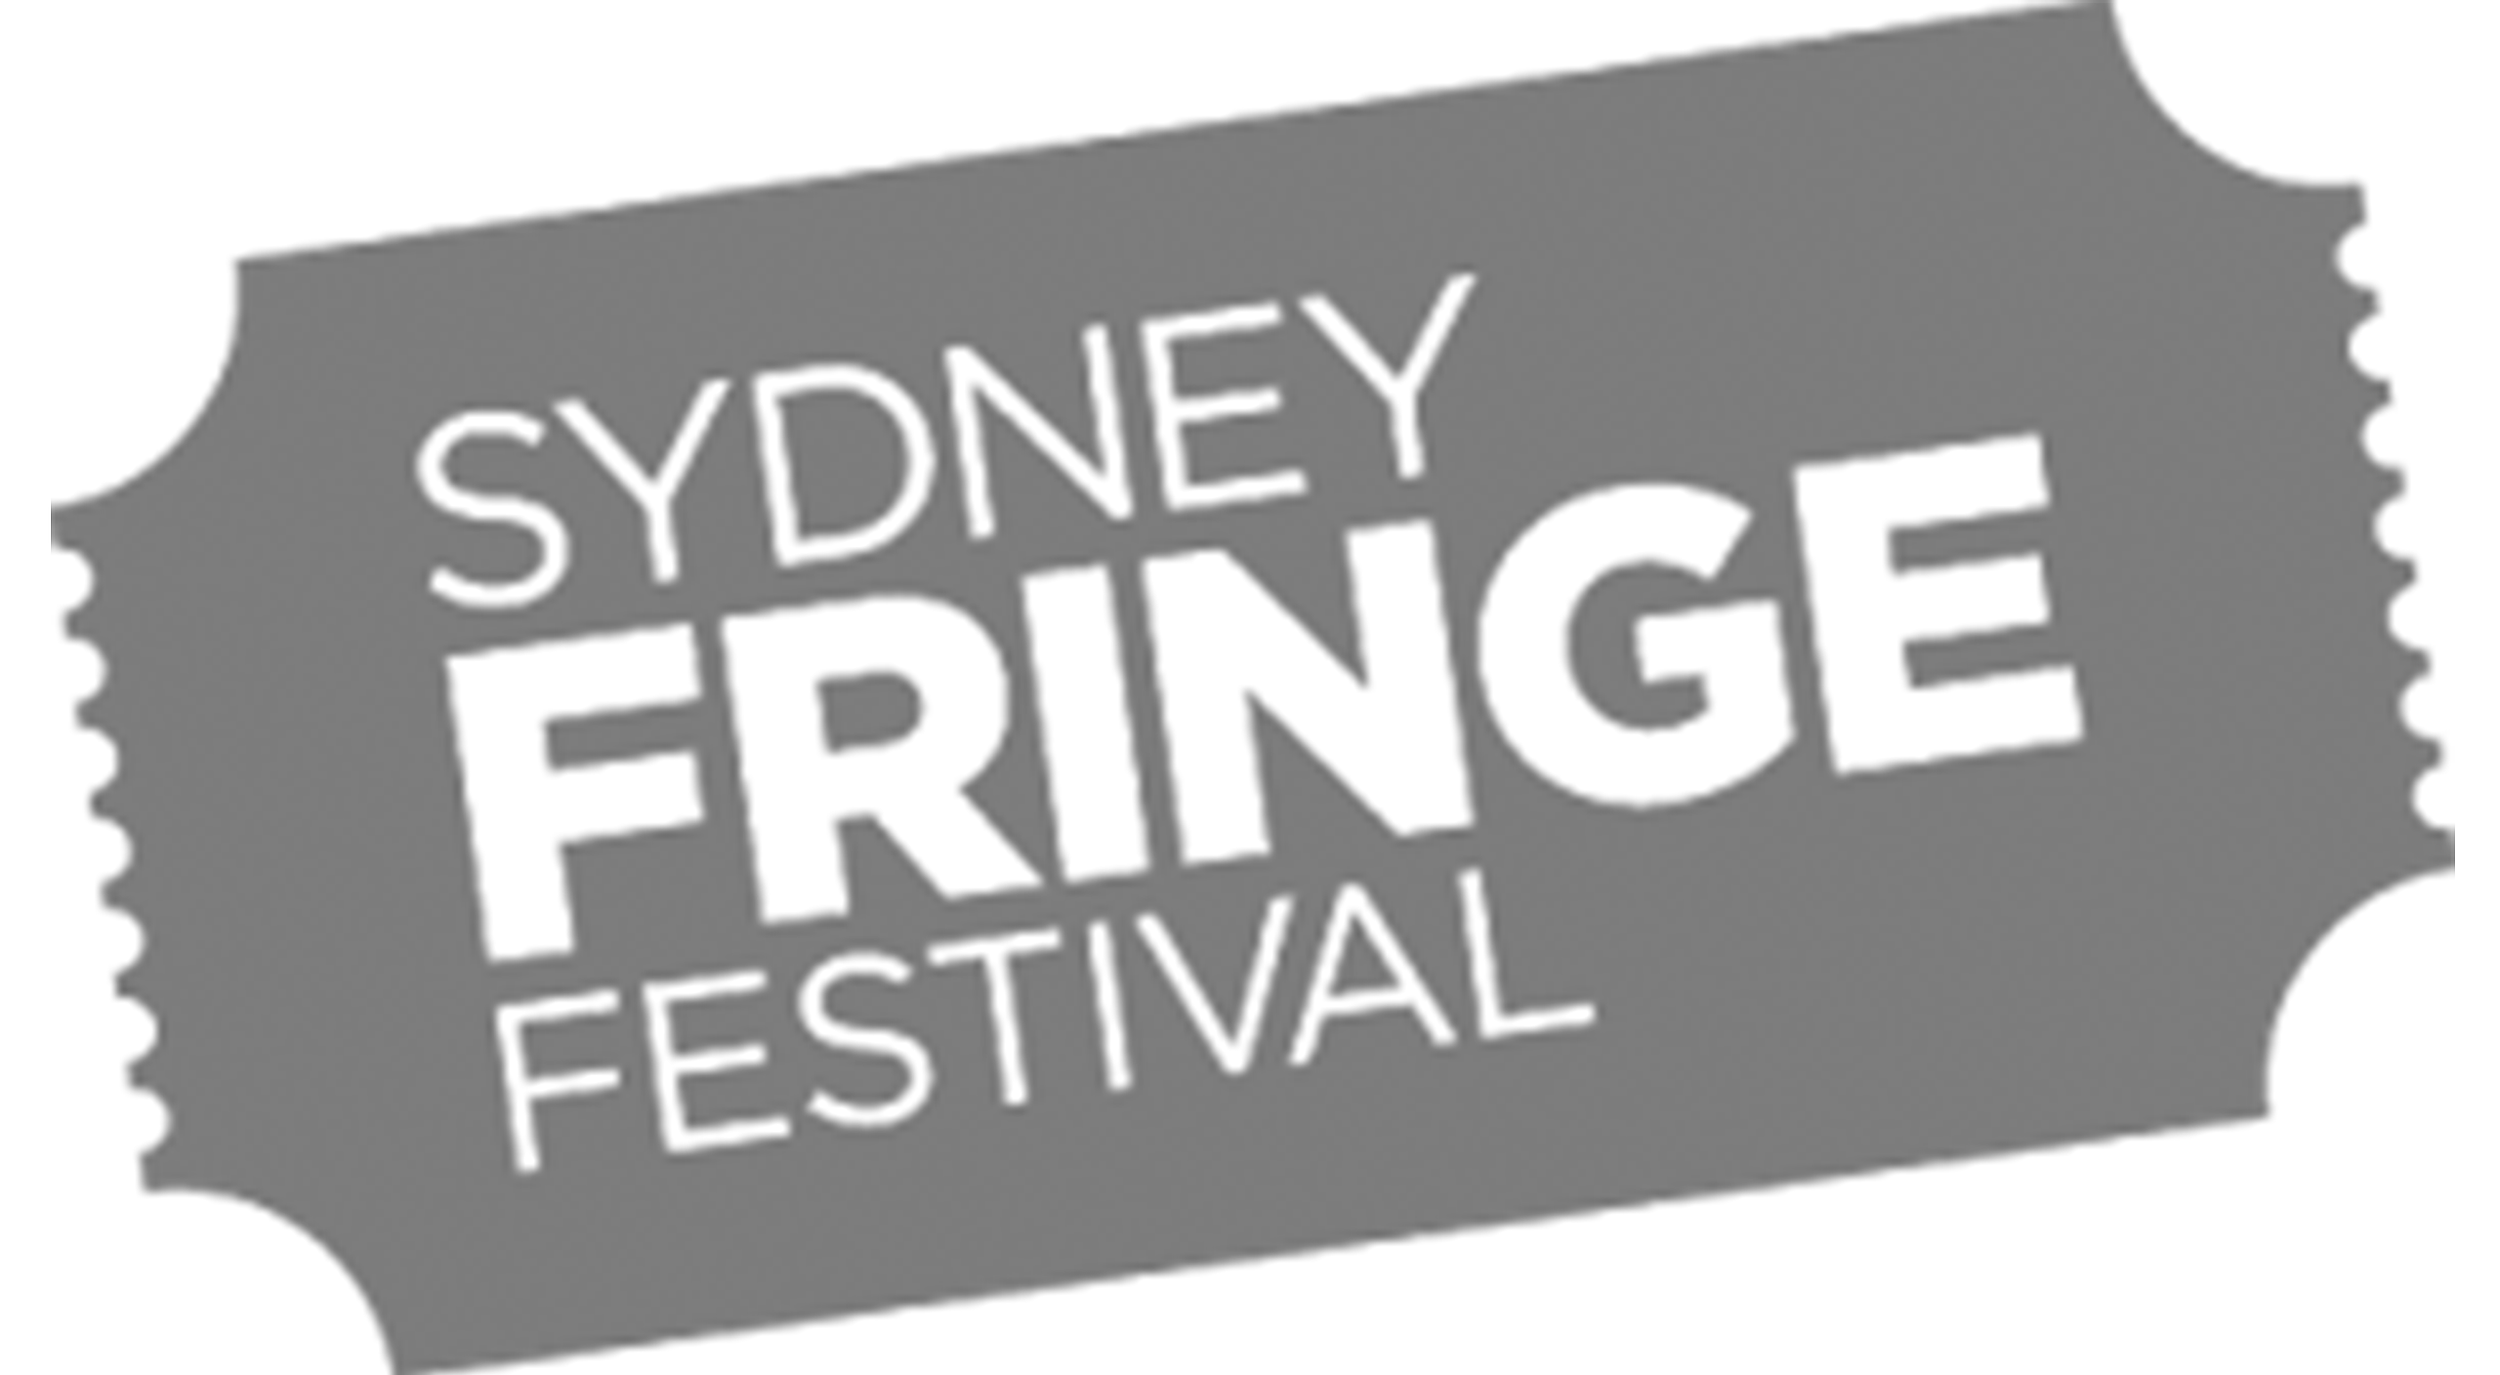 Sydney Fringe Festival BW logo.png